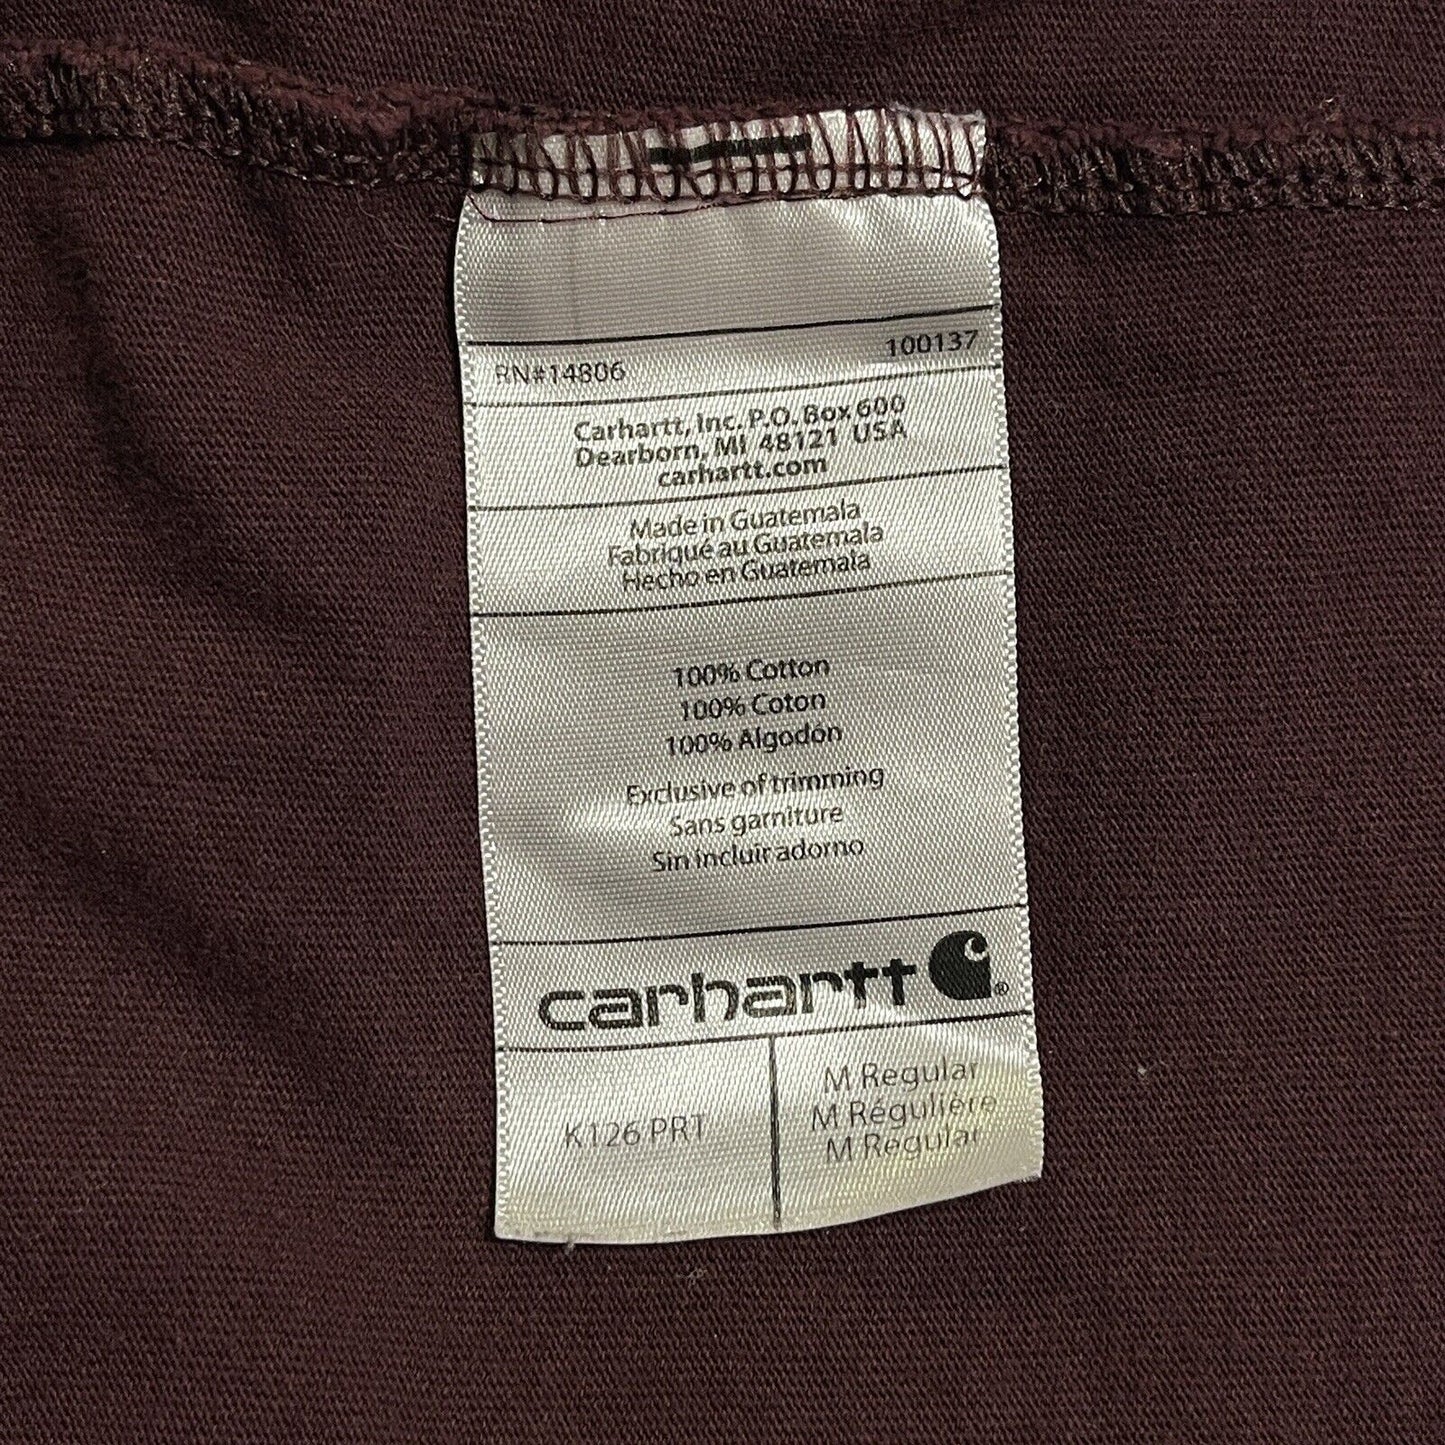 Carhartt K126 Mens Size M Long Sleeve Pocket Tshirt Original Fit Port Maroon